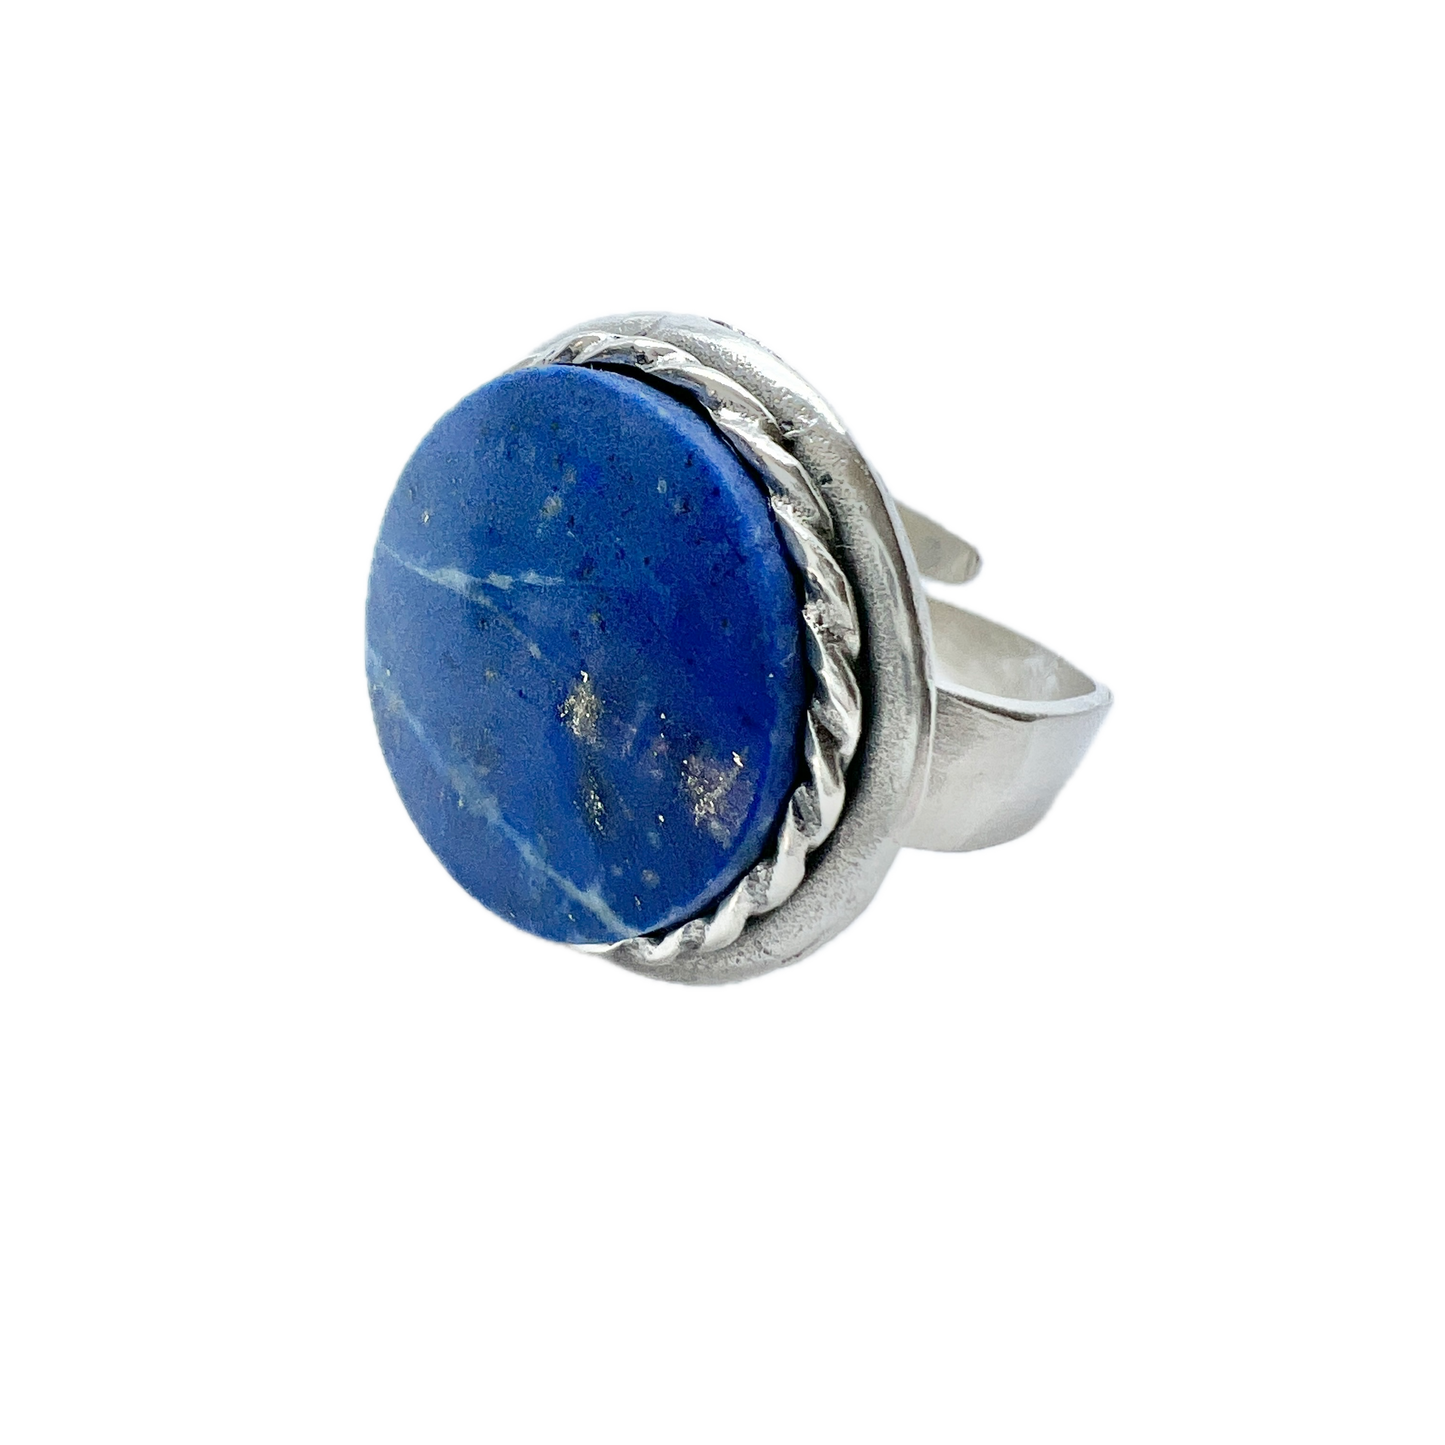 Polar Koru, Finland 1974. Vintage Sterling Silver Lapis Lazuli Ring. Adjustable Size.